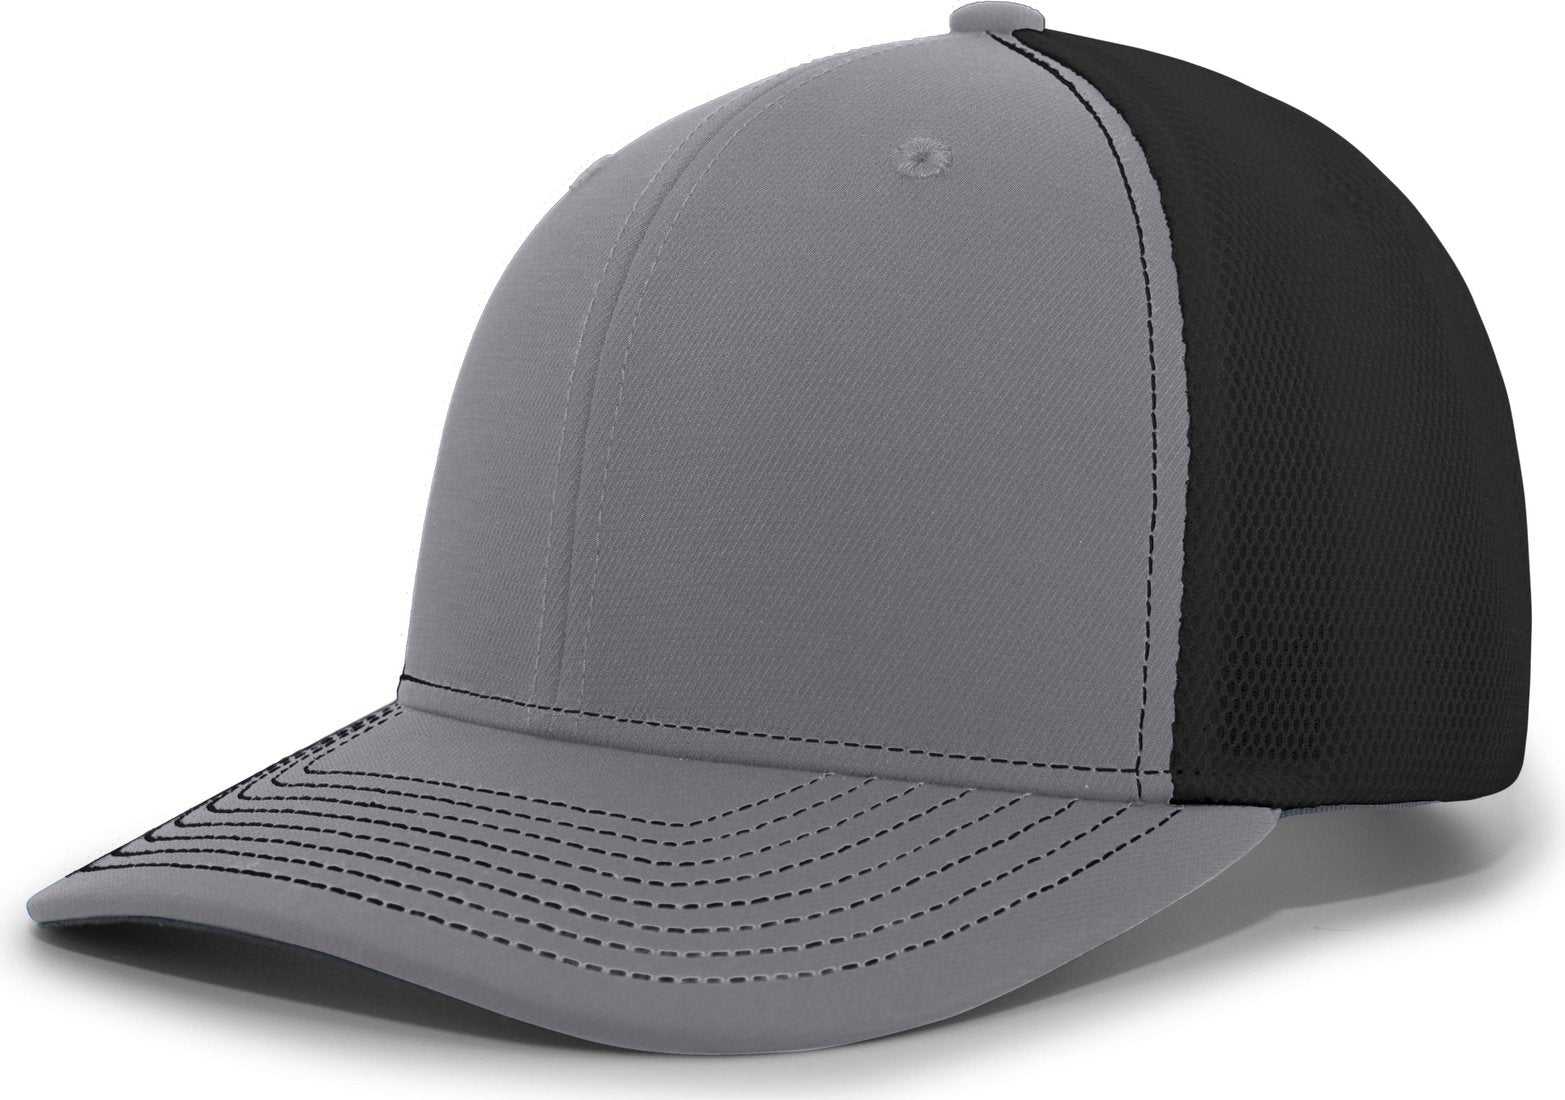 Pacific Headwear P365 Air Mesh Sideline Cap - Graphite Black Graphite - HIT a Double